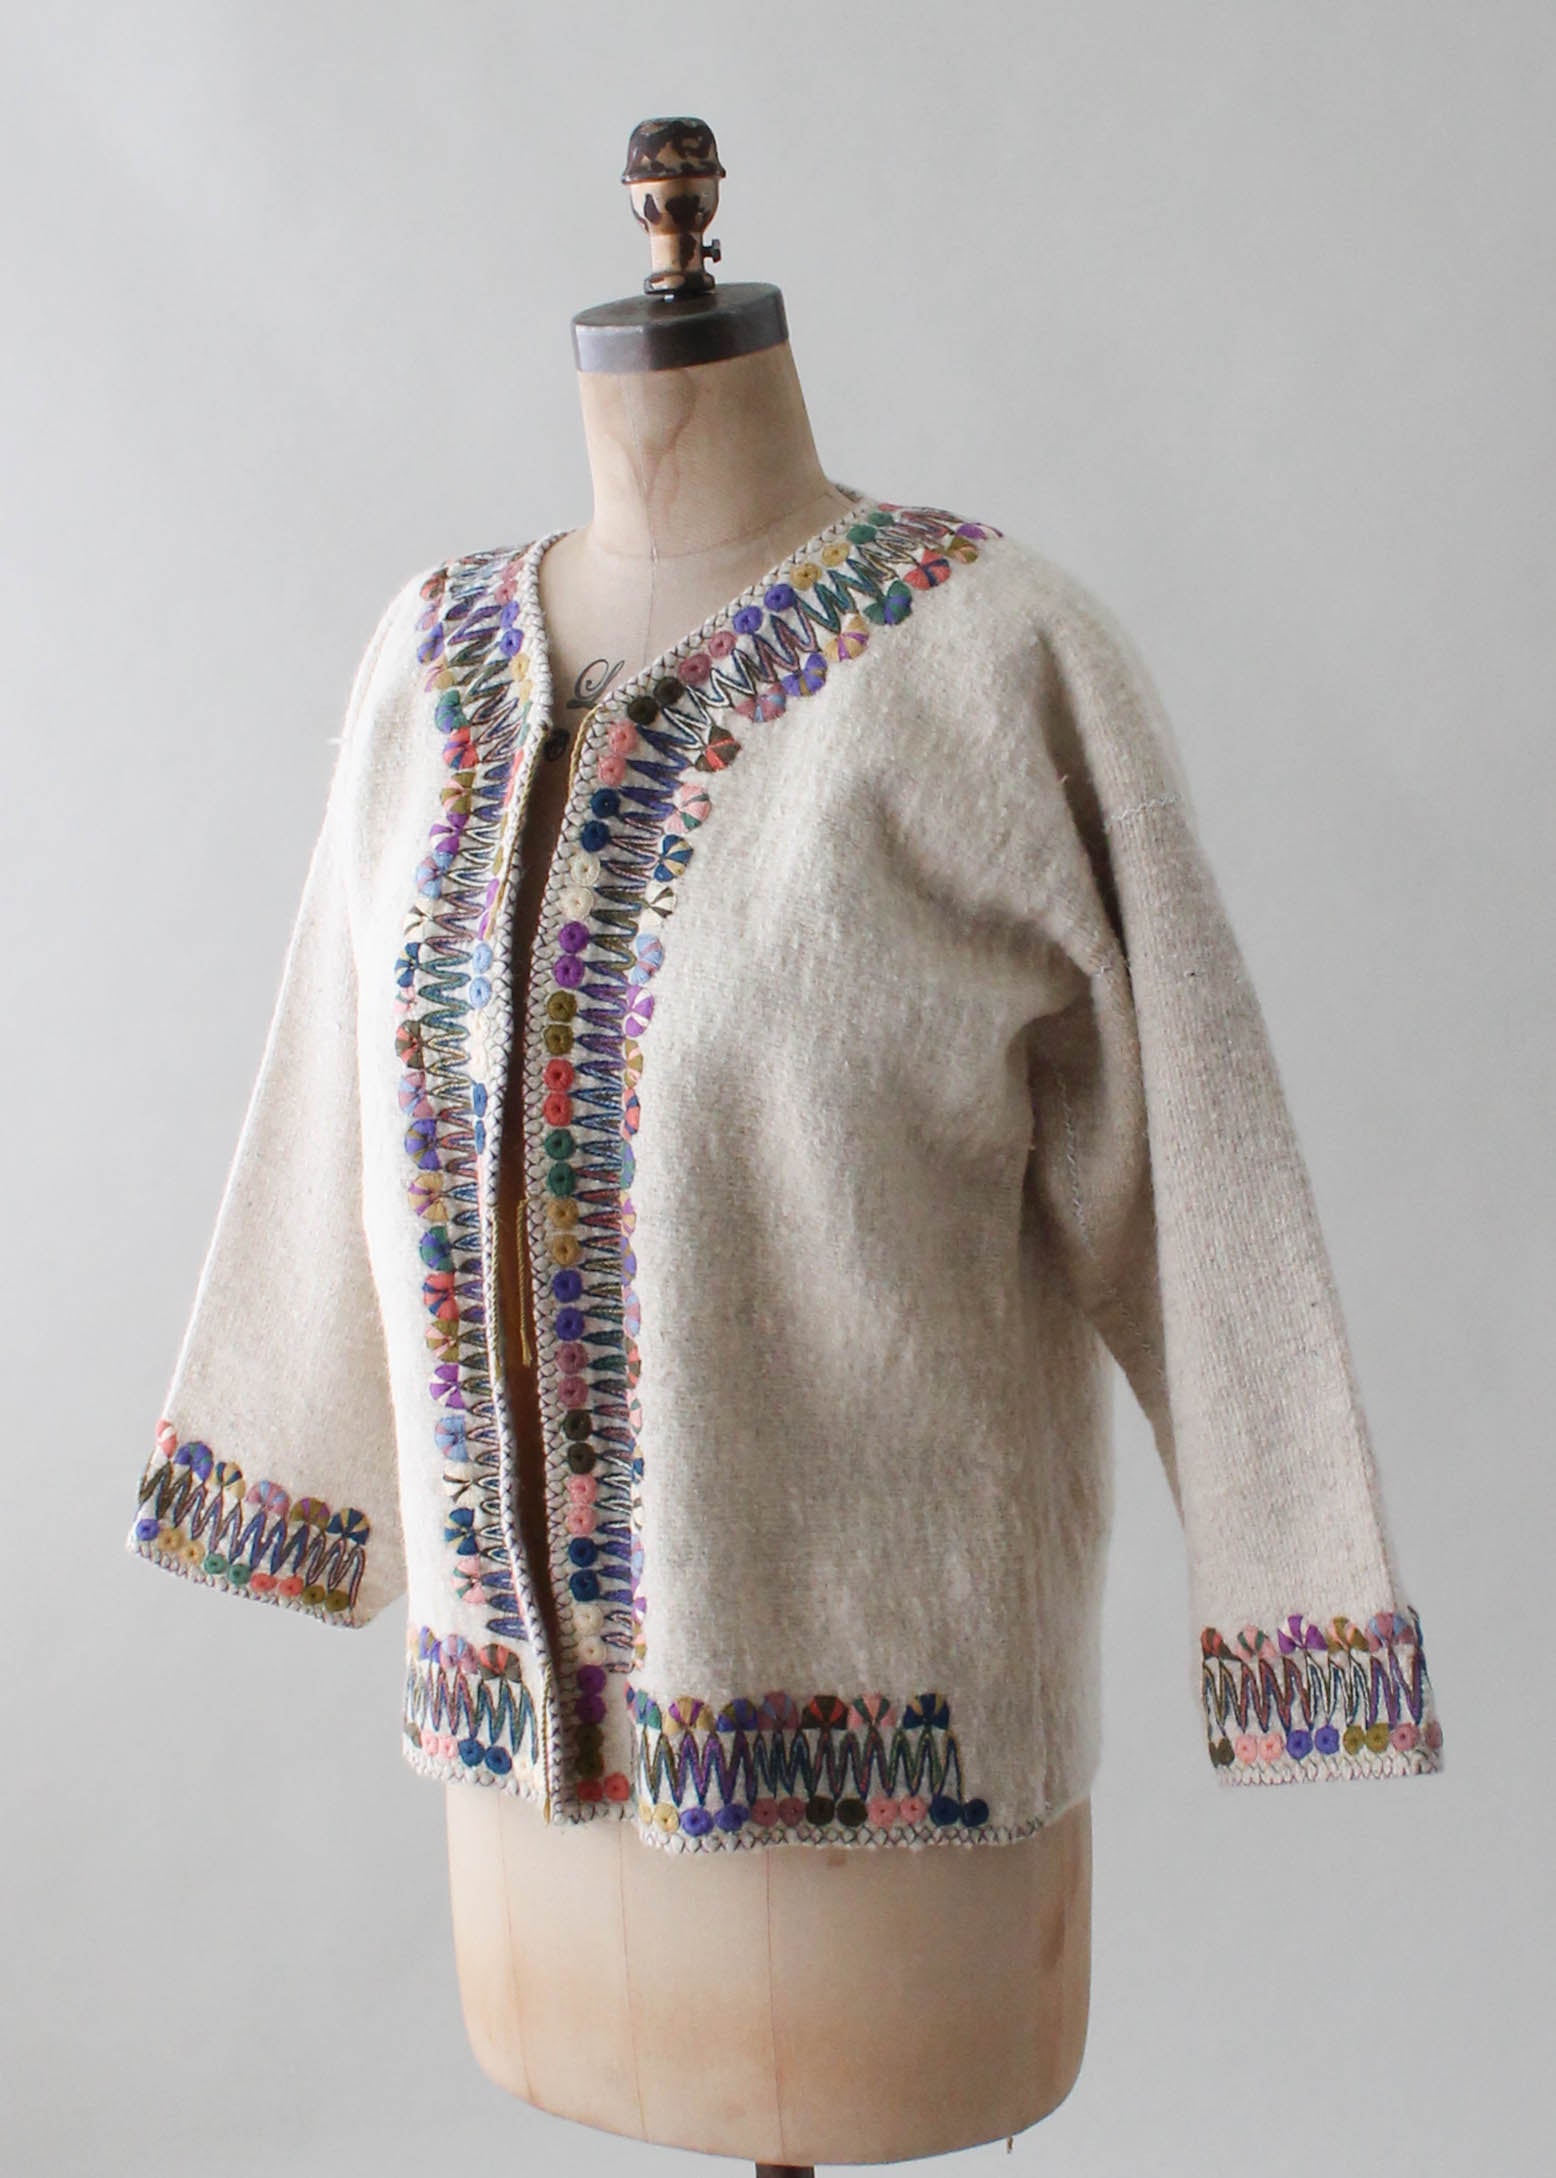 USA vintage embroidery knit jacket